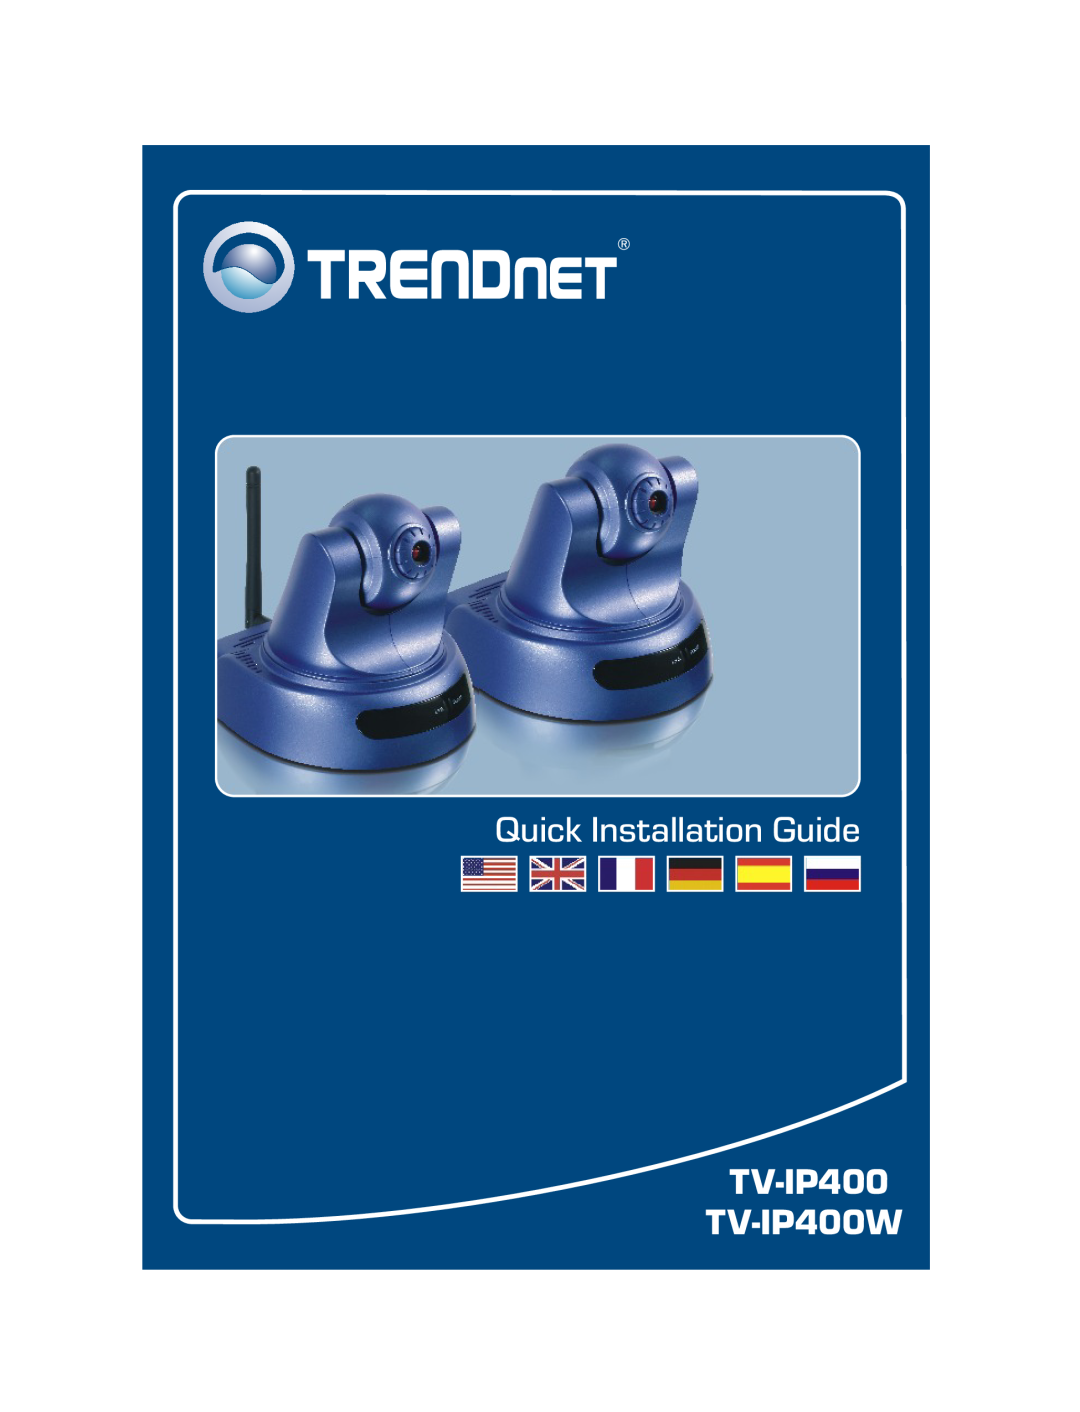 TRENDnet TEW-637AP, TRENDNET manual 3.01, Quick Installation Guide 